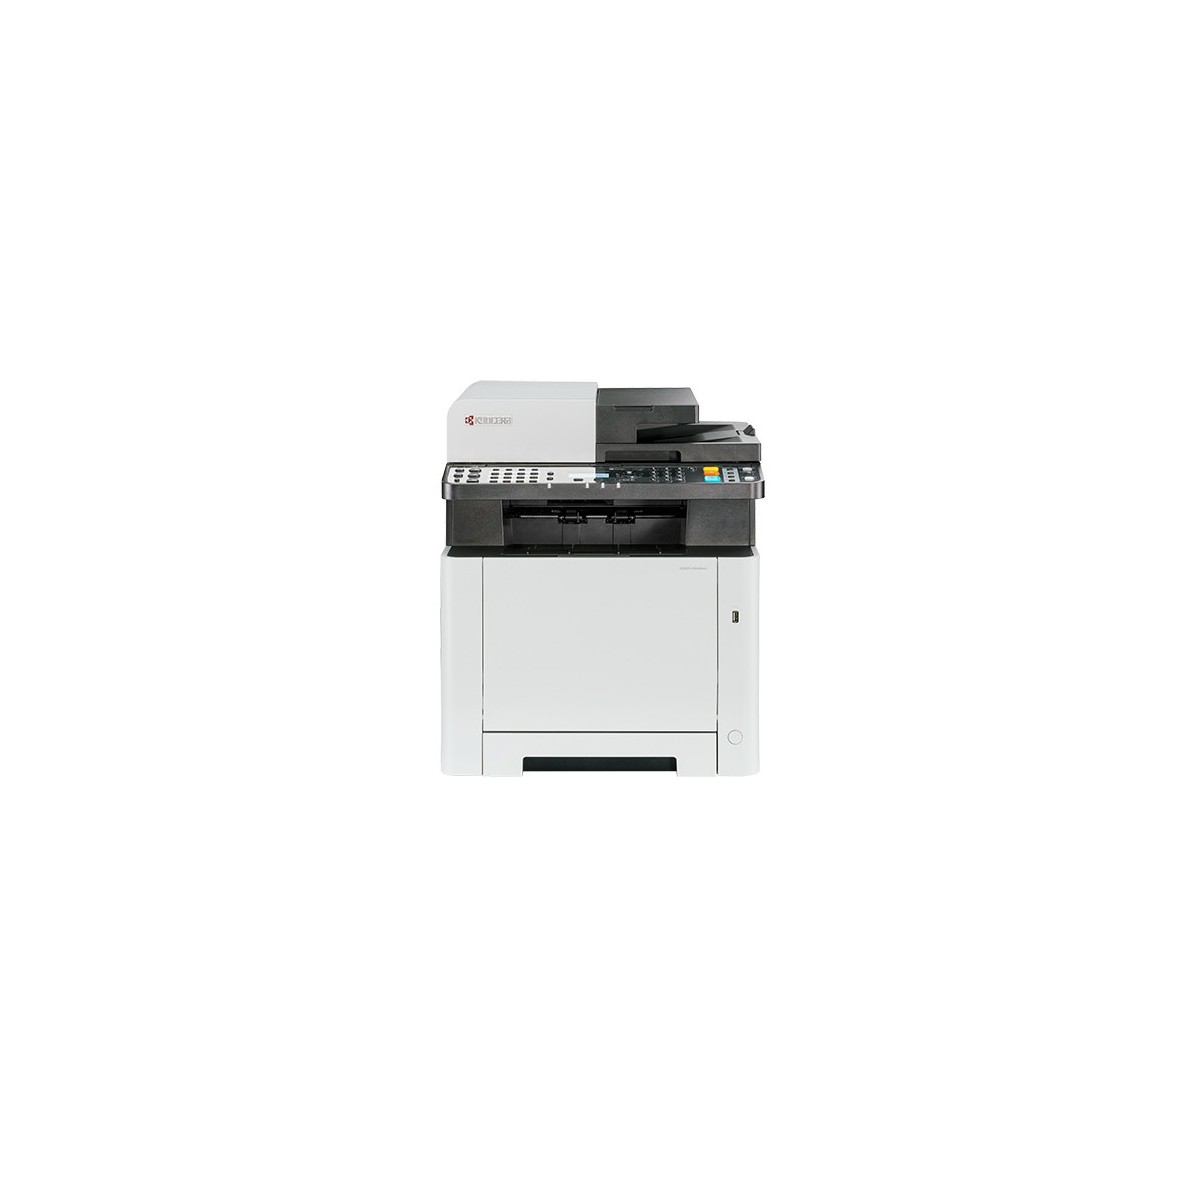 Kyocera ECOSYS MA2100CFX - Multifunction Printer - Colored